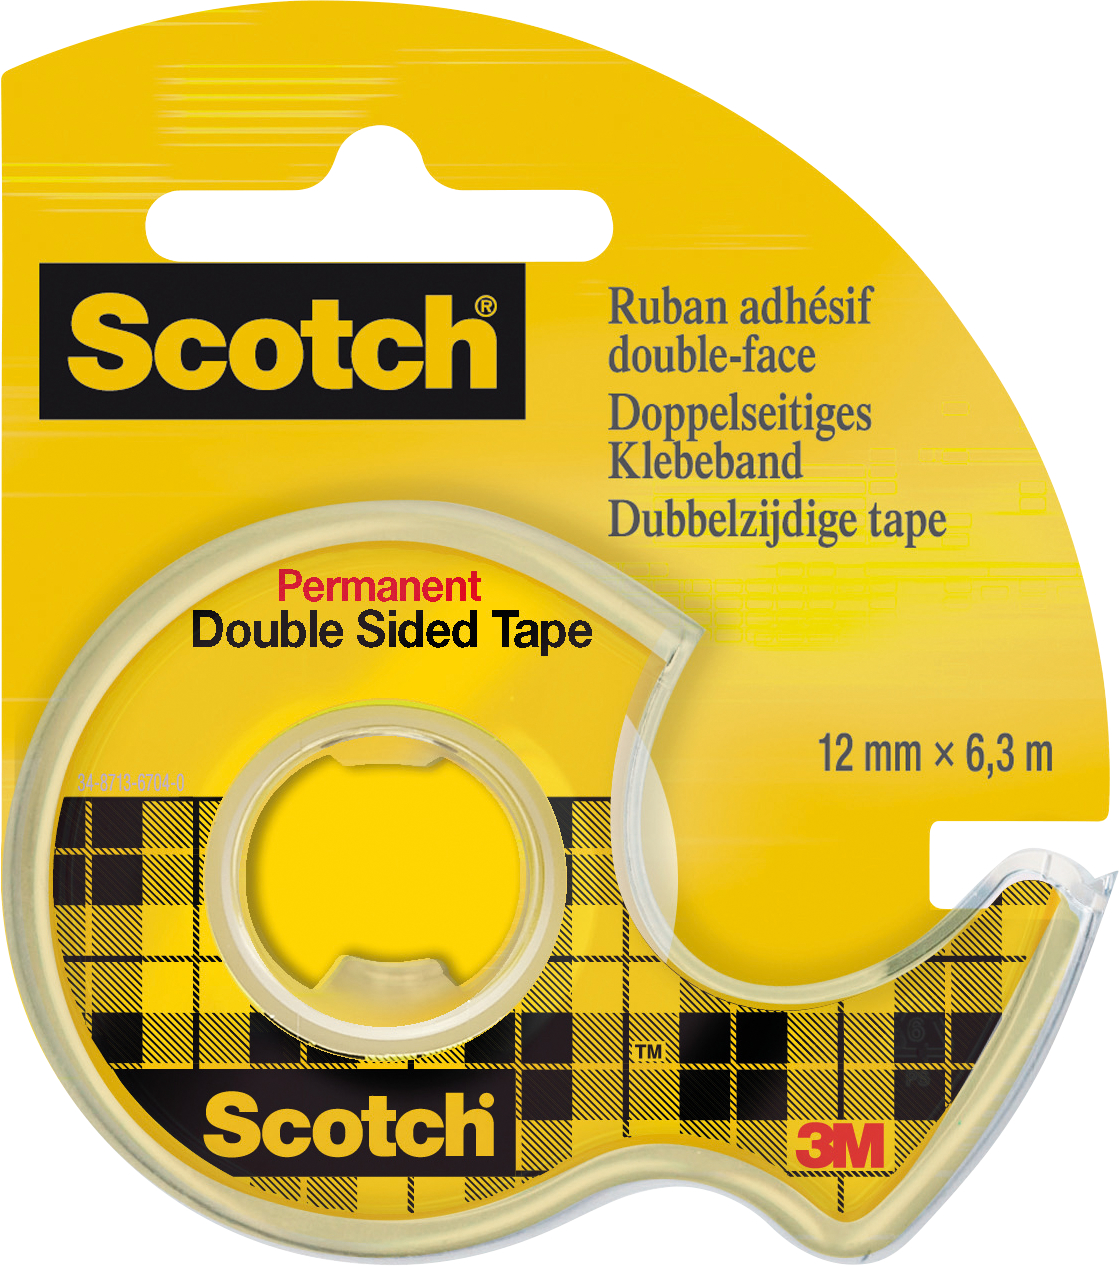 SCOTCH Tape a. rouleau 665 12mmx6.3m 136D-MDEU double-face